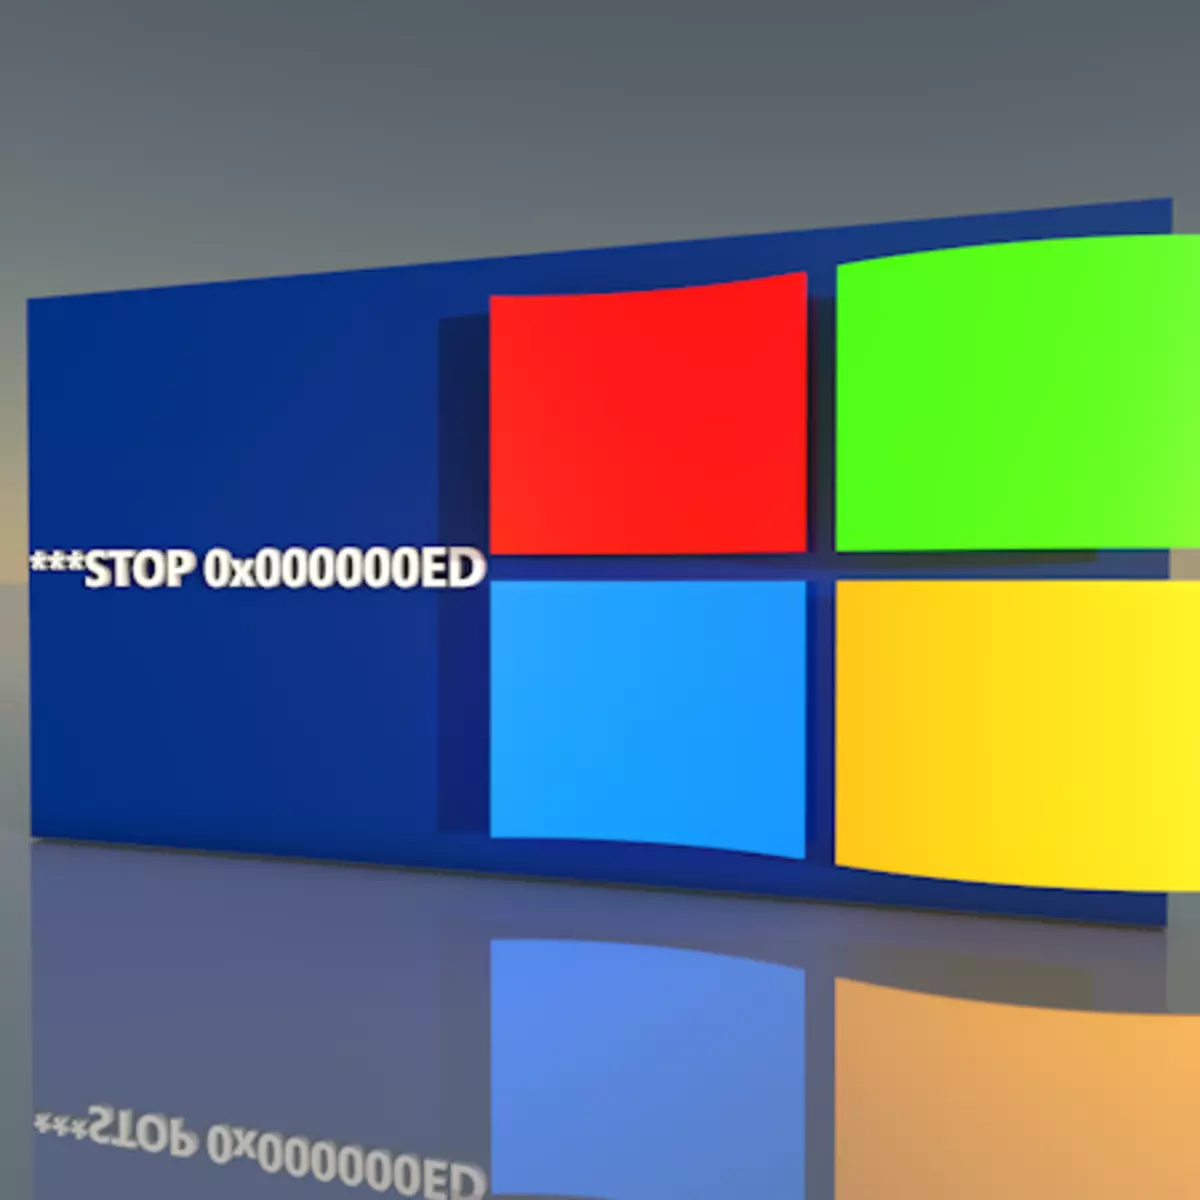 Windows XP ବୁଟ କରିବା ସମୟରେ କିପରି ତୃଟି "STOP 0X000000EED" ସଠିକ୍ କରିବାକୁ